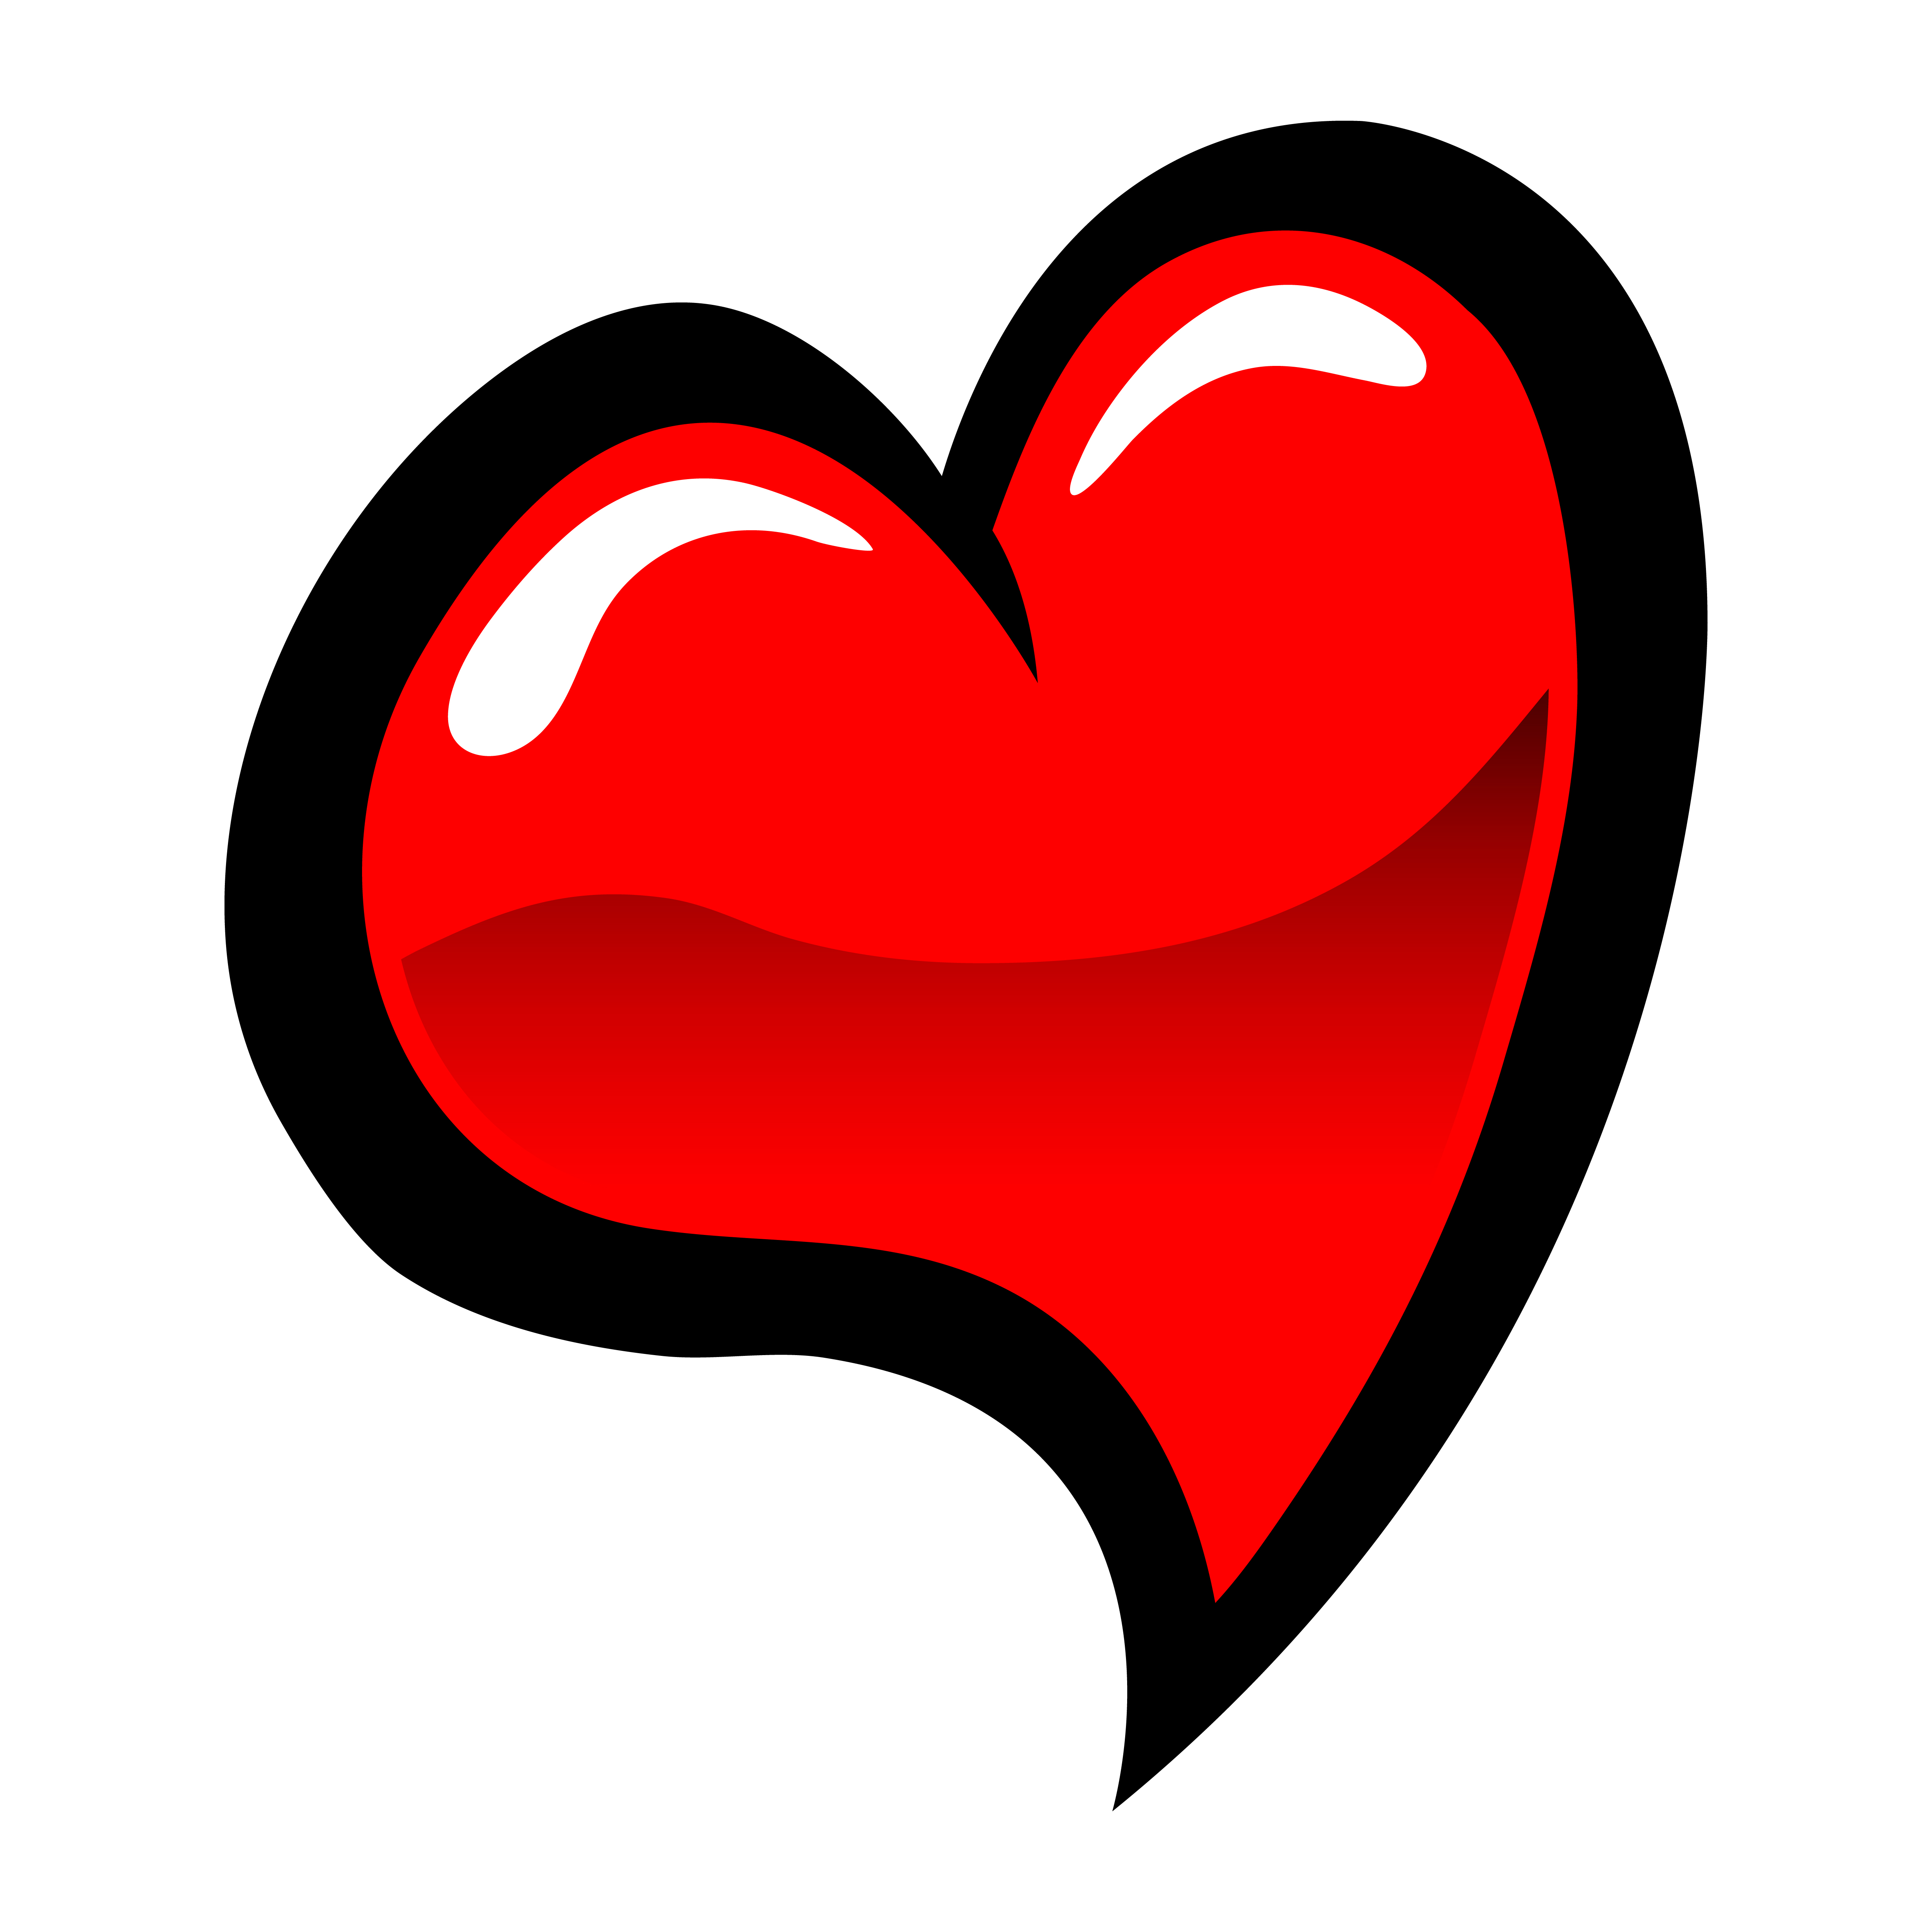 Download Heart Romantic Love graphic 551853 - Download Free Vectors, Clipart Graphics & Vector Art